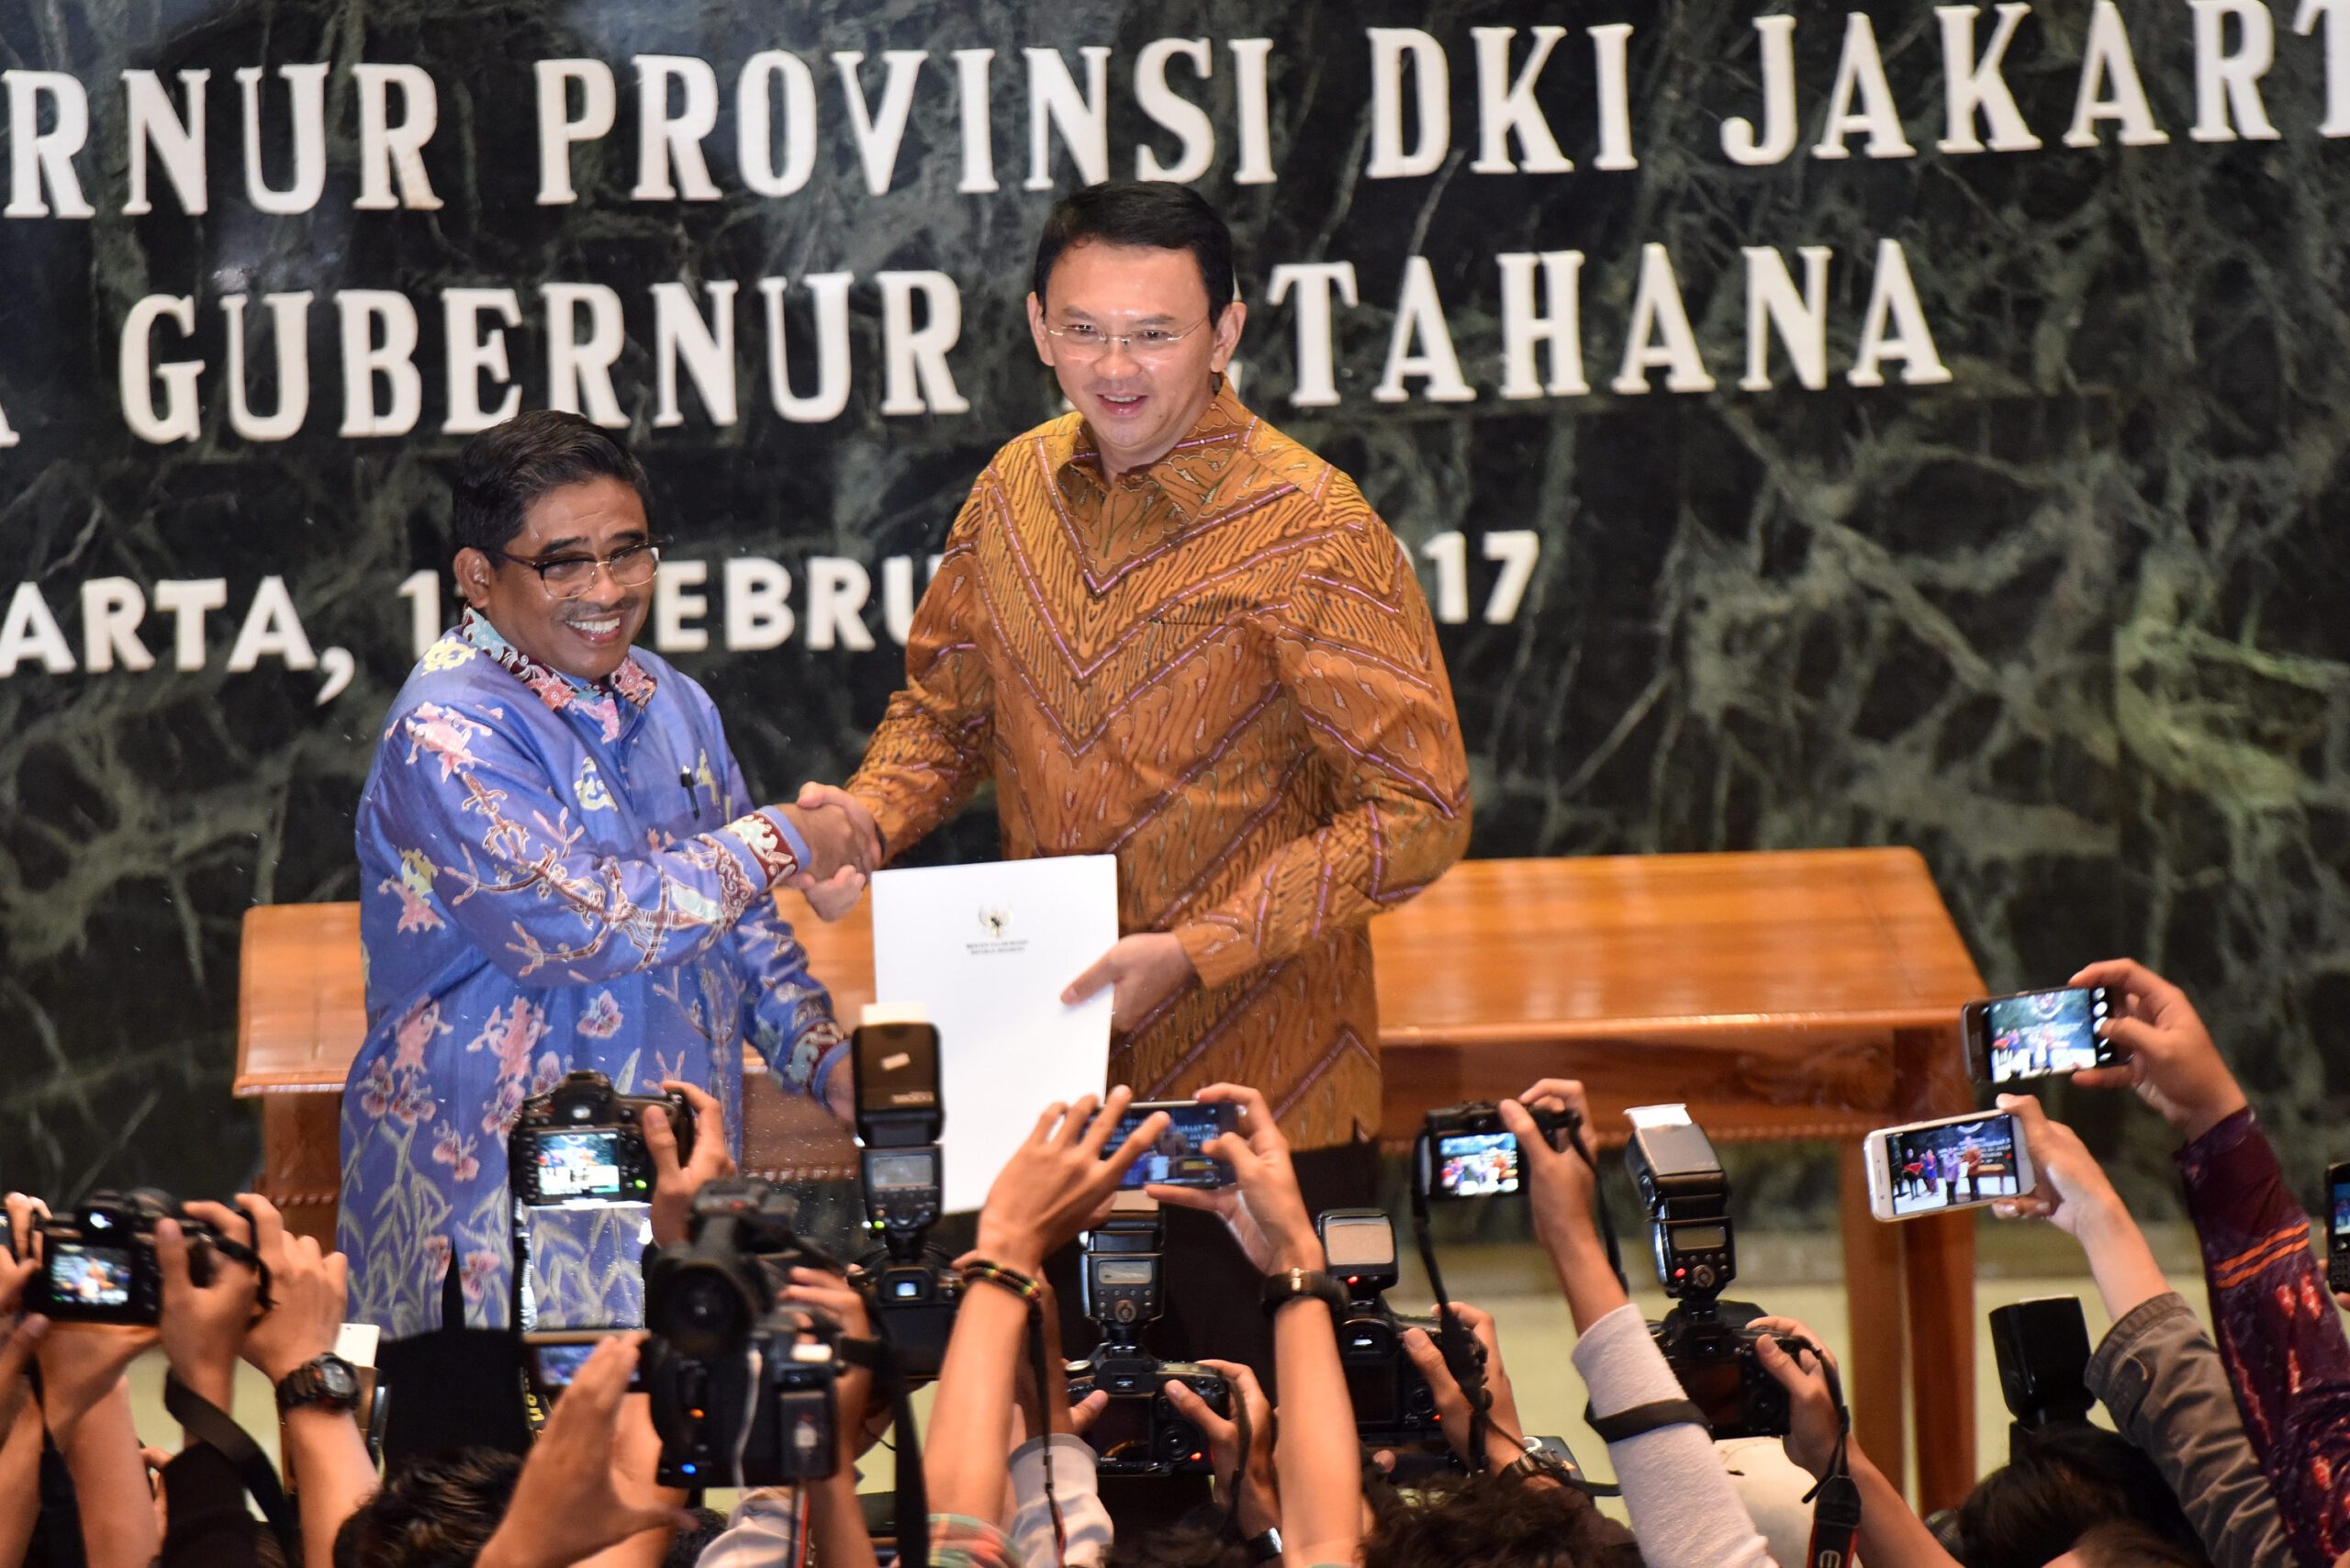 Cuti usai, Ahok kembali menjabat sebagai Gubernur DKI Jakarta